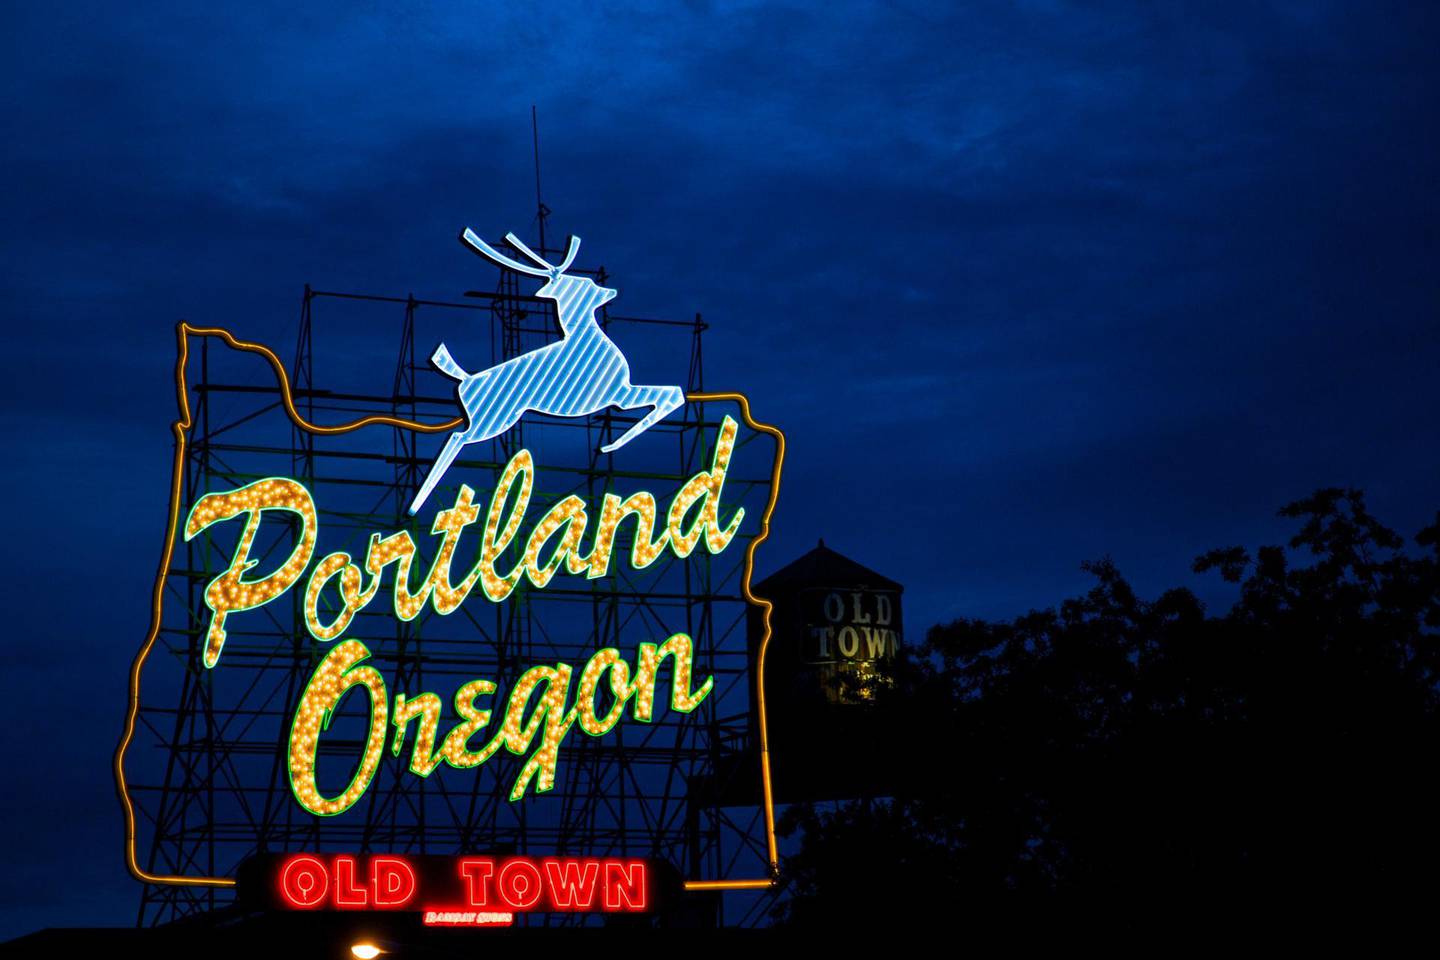 White Stage sign in Portland, Oregon.